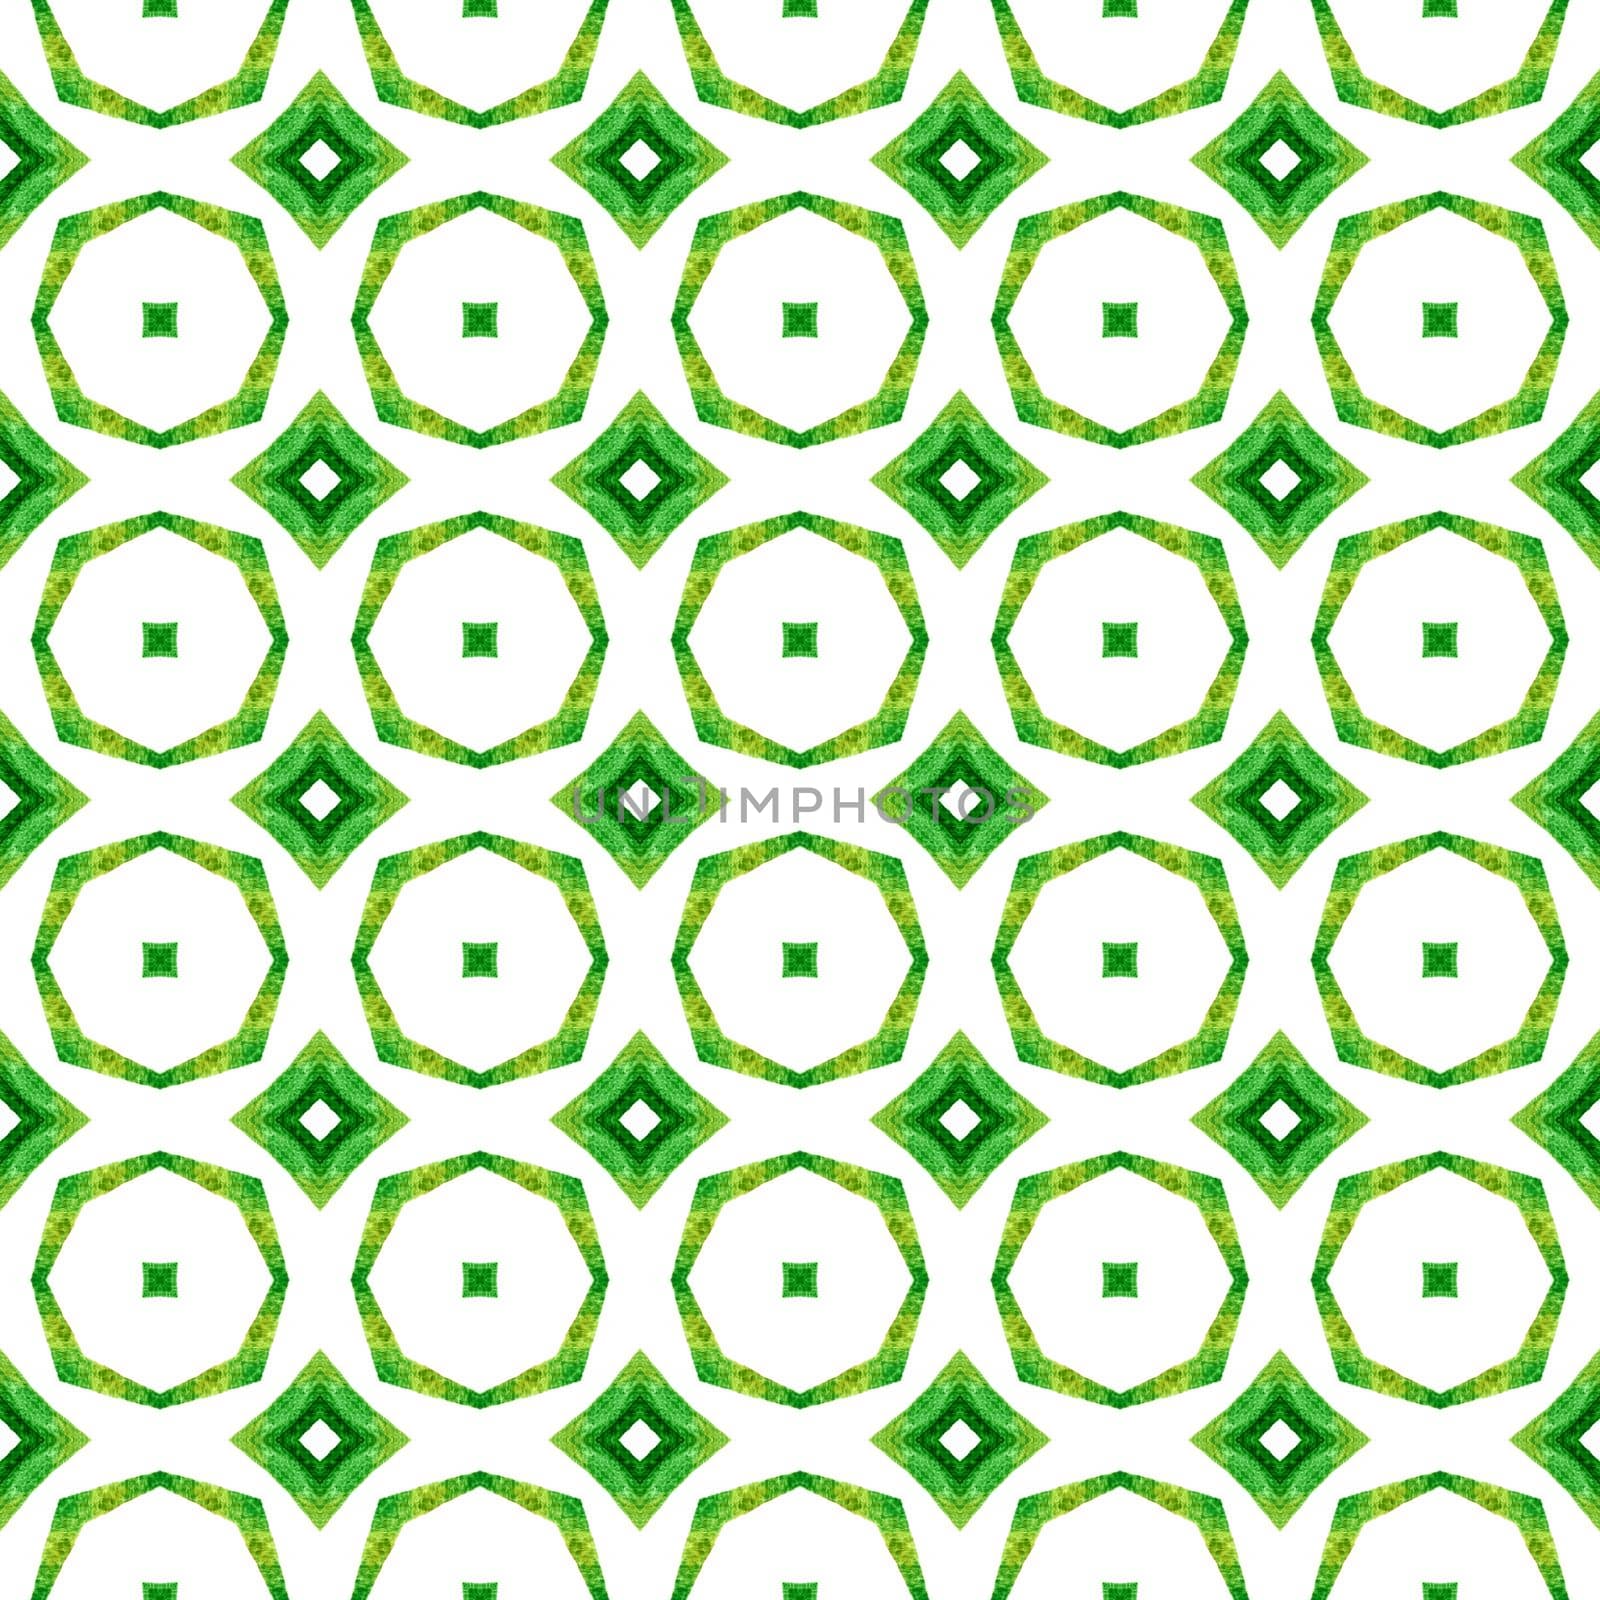 Green geometric chevron watercolor border. Green great boho chic summer design. Textile ready lively print, swimwear fabric, wallpaper, wrapping. Chevron watercolor pattern.